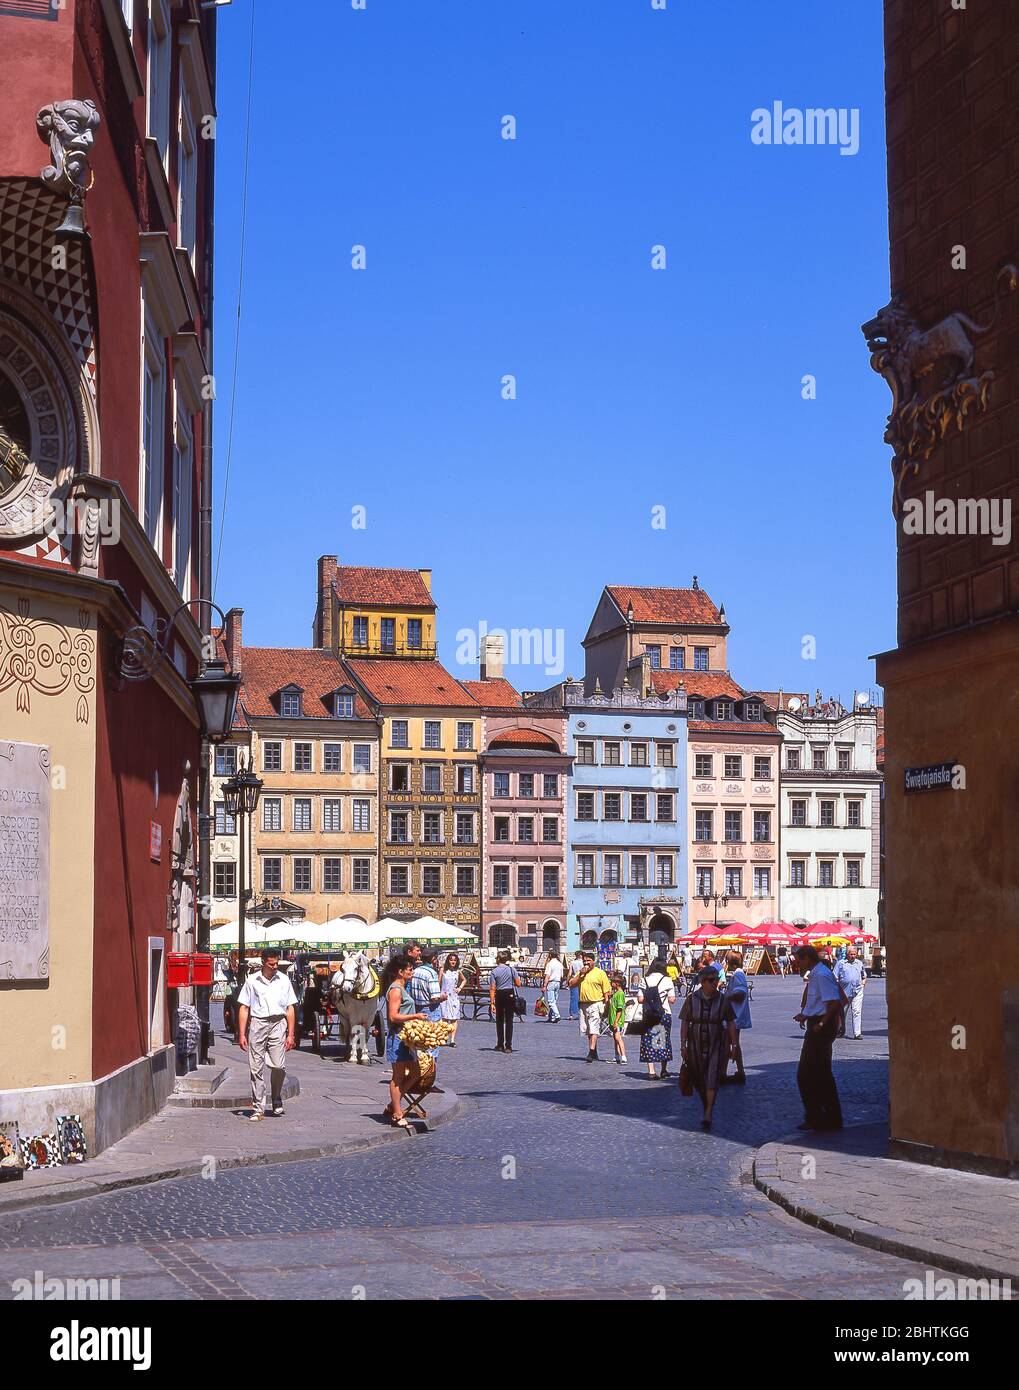 Mercato della Città Vecchia da Swietojanska, Città Vecchia, Varsavia (Warszawa), Repubblica di Polonia Foto Stock